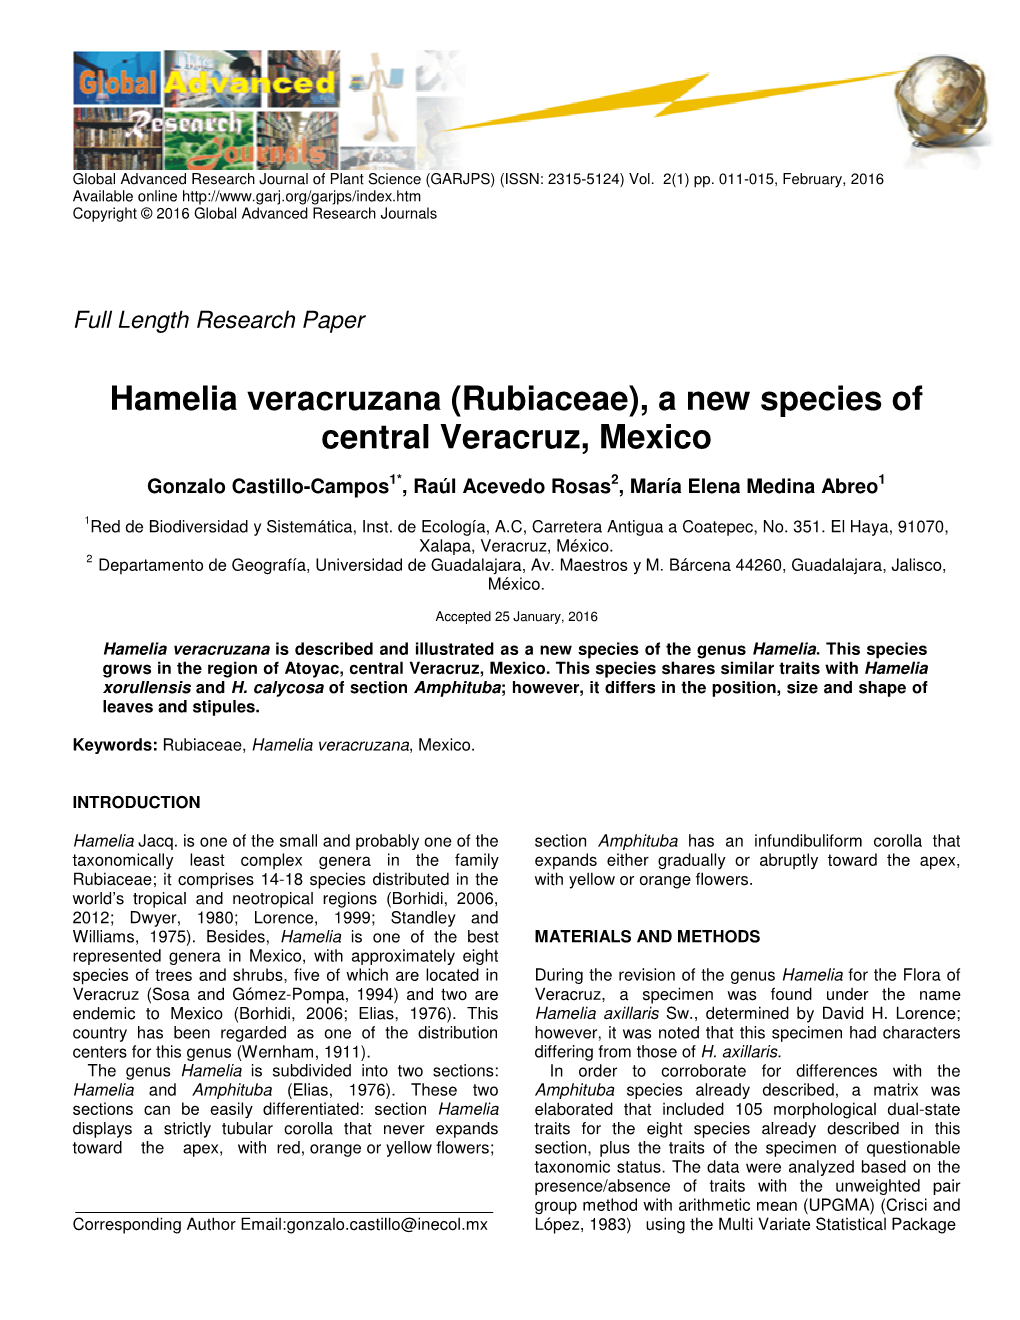 Hamelia Veracruzana (Rubiaceae), a New Species of Central Veracruz, Mexico